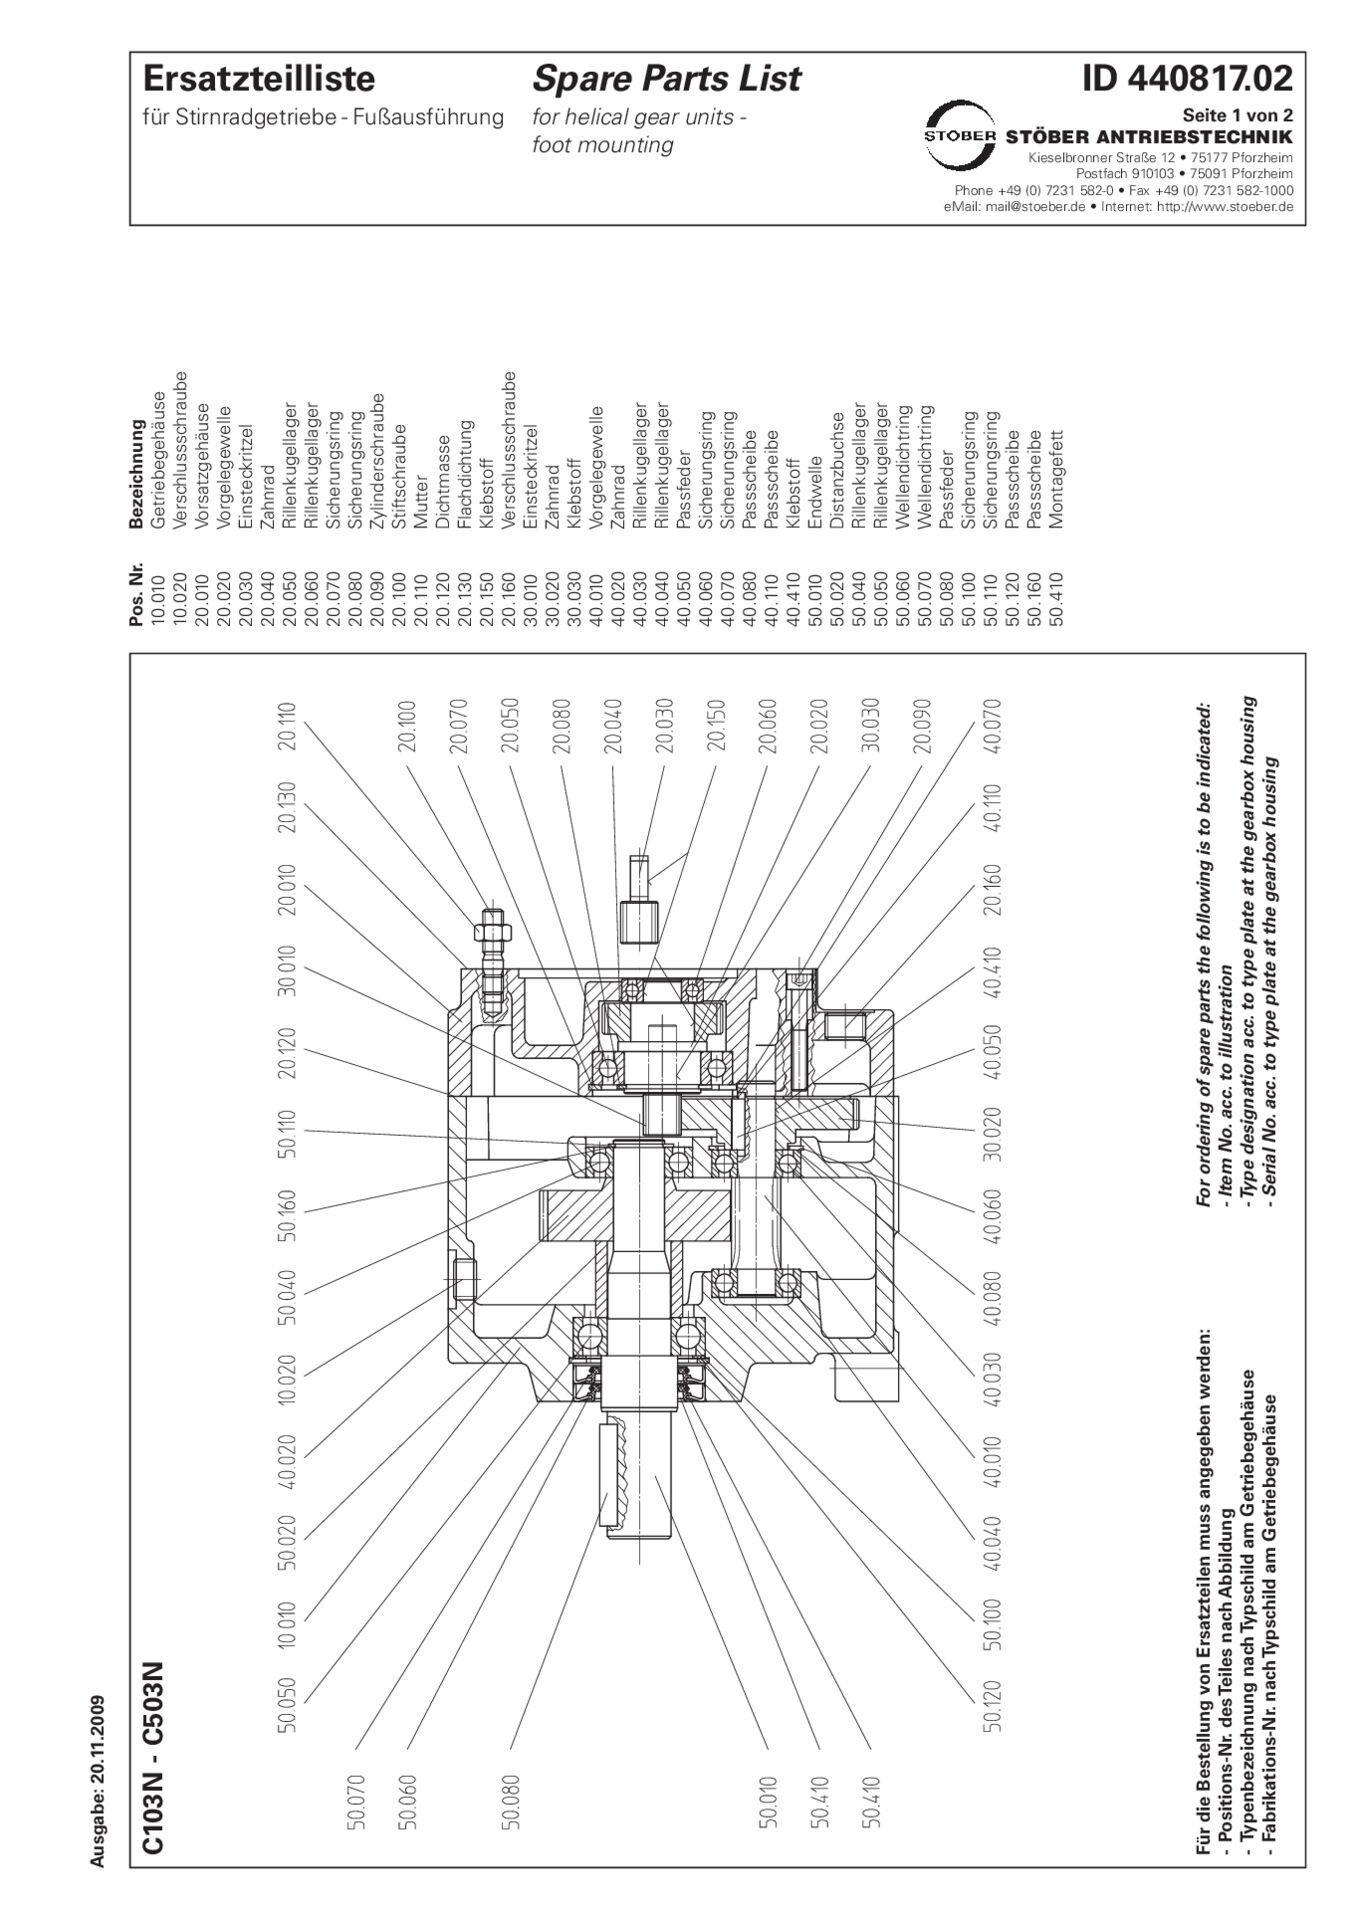 Replacement parts list helical gear units C103 C203 C303 C403 C503 N